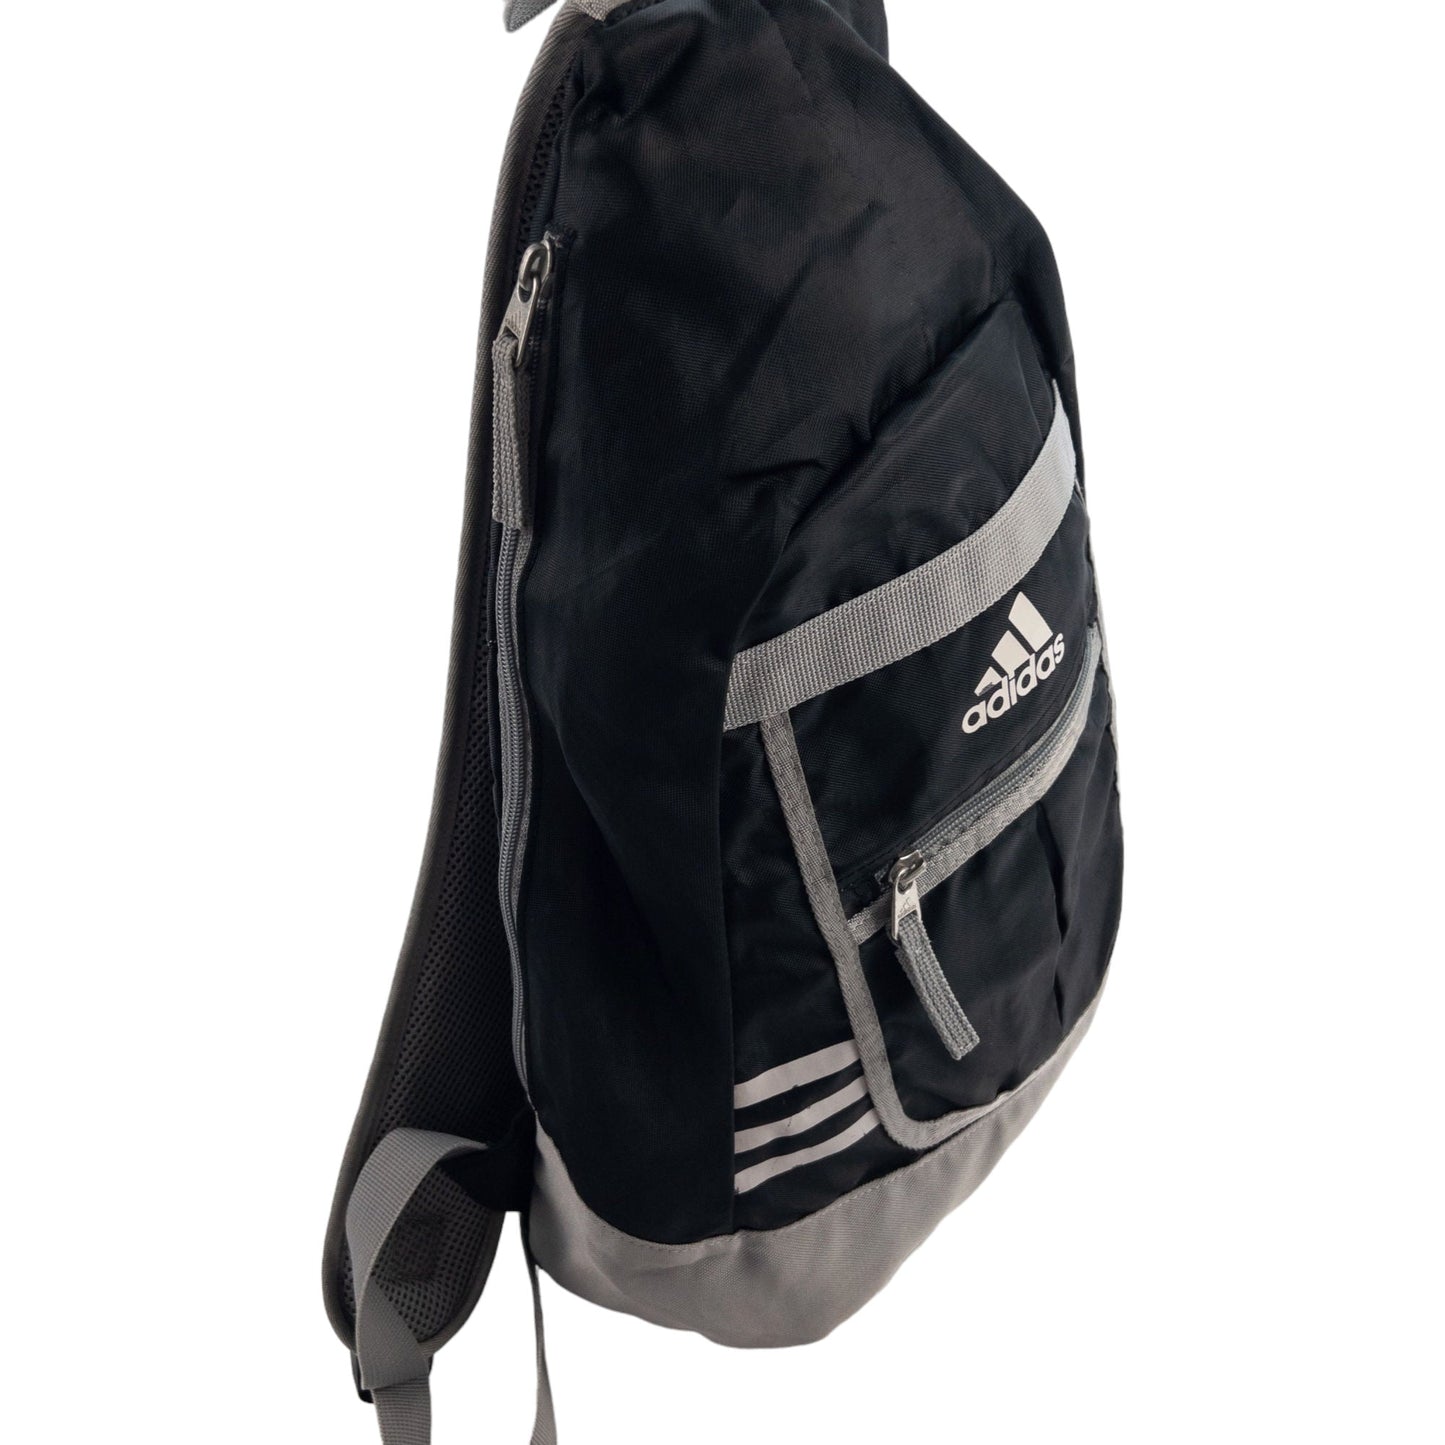 Vintage Adidas Sling Bag